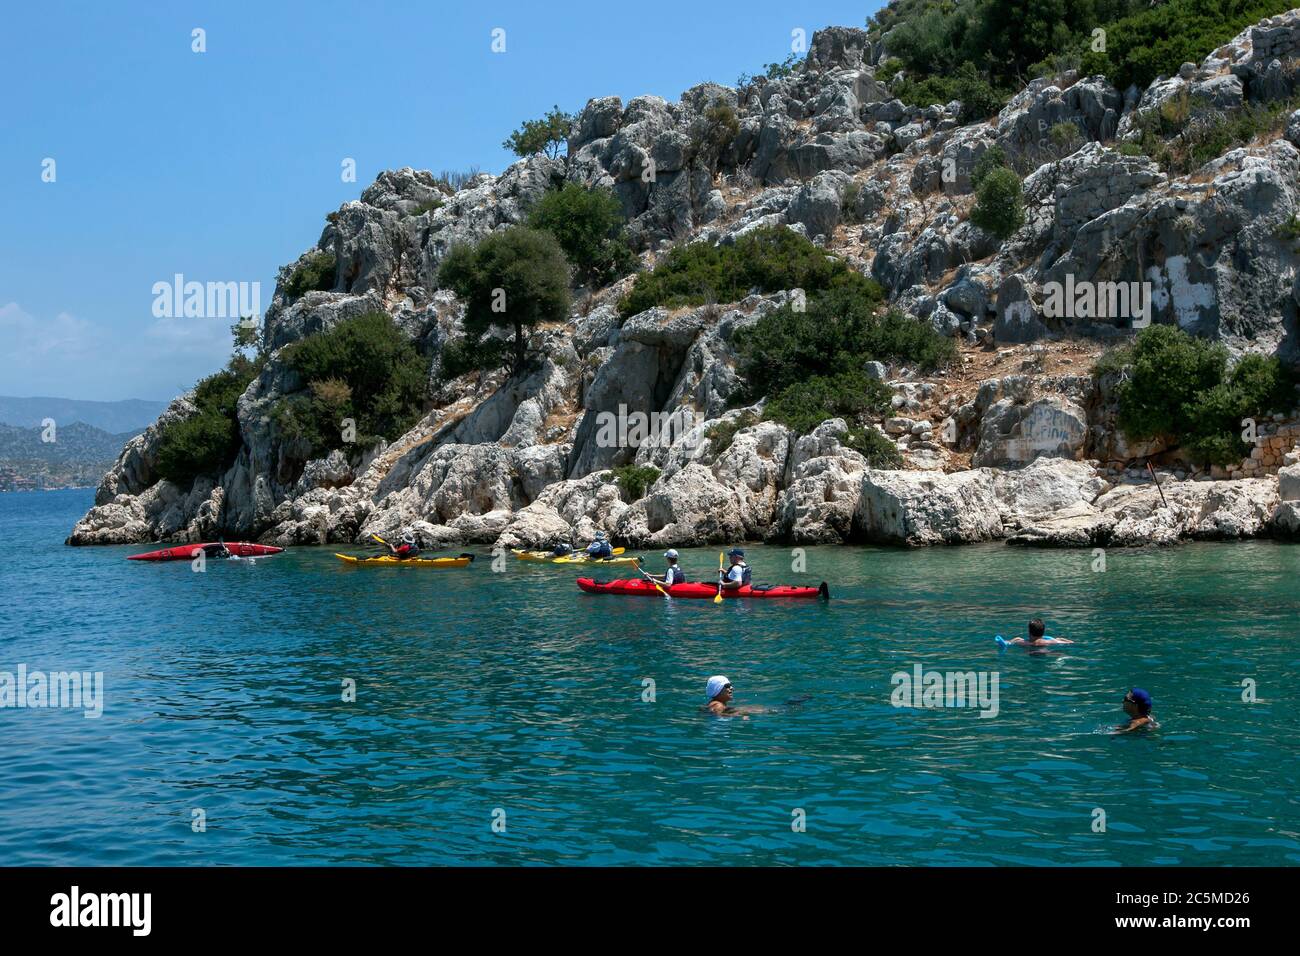 Kayakers paddle adjacent to the Sunken City of Simena off Kekova Island in Turkey. The city sank into the Mediterranean Sea. Stock Photo